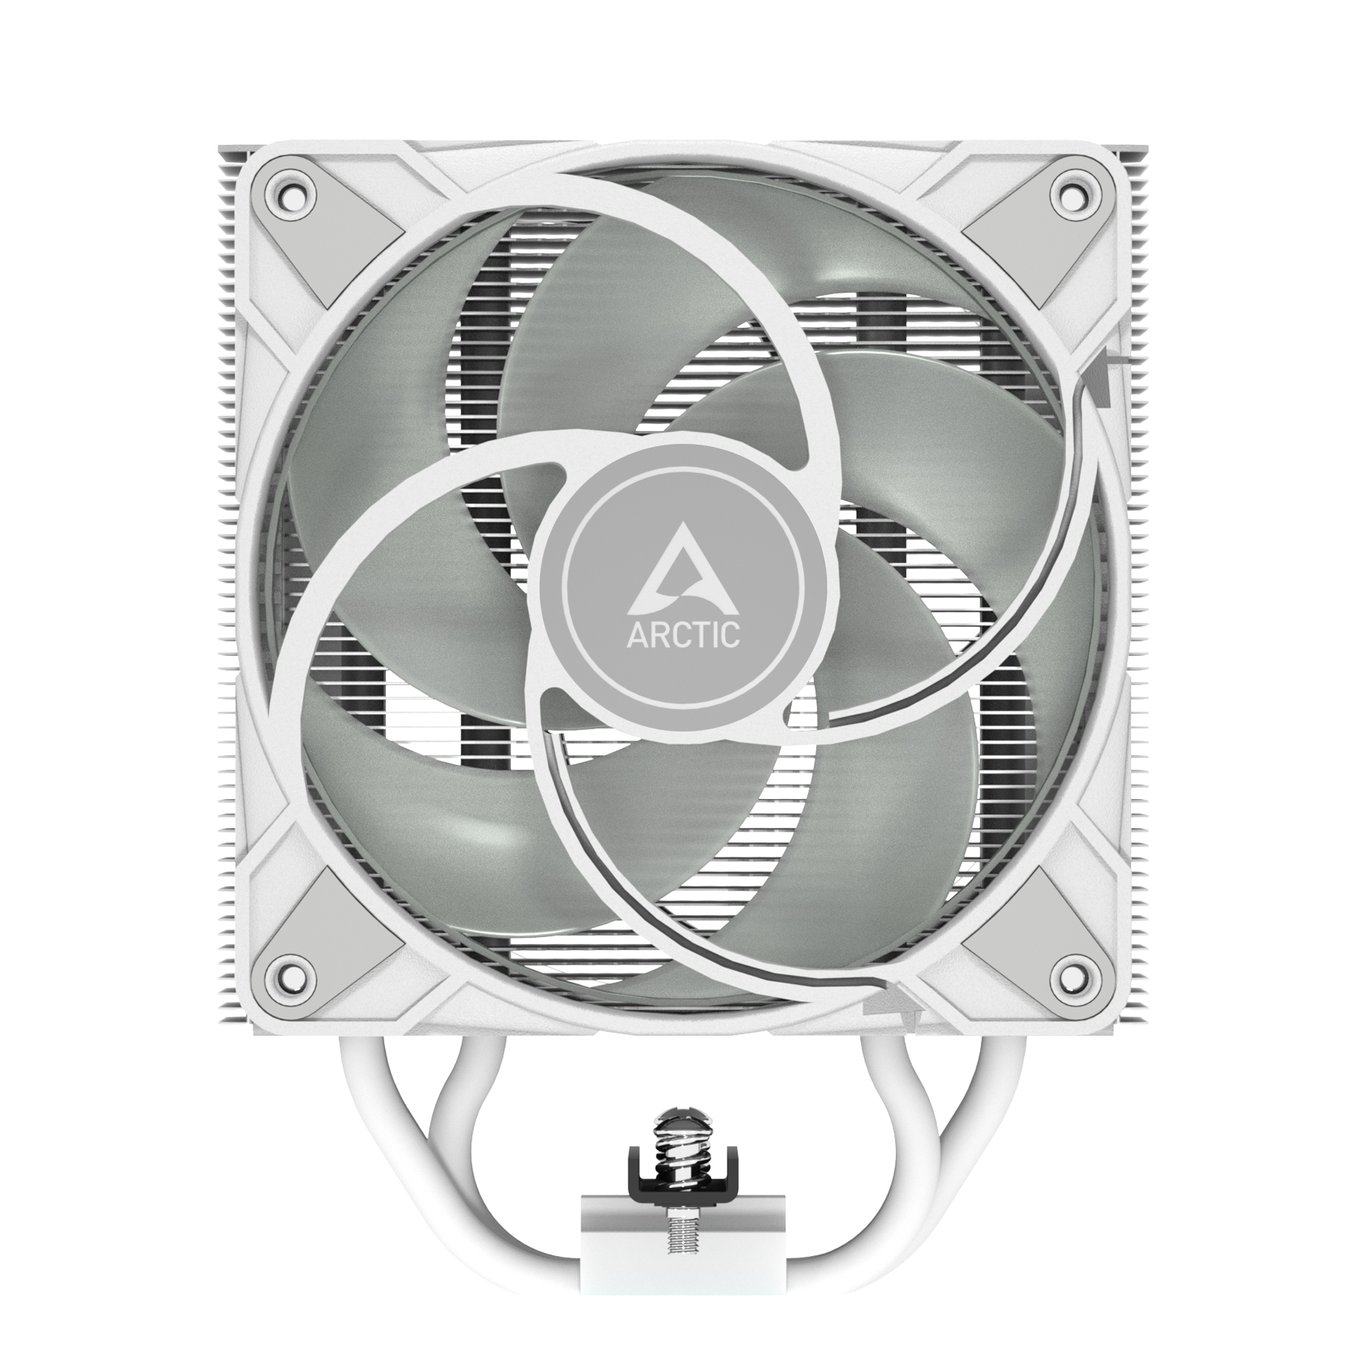 ARCTIC Freezer 36 A-RGB 風冷散熱器 - White 白色